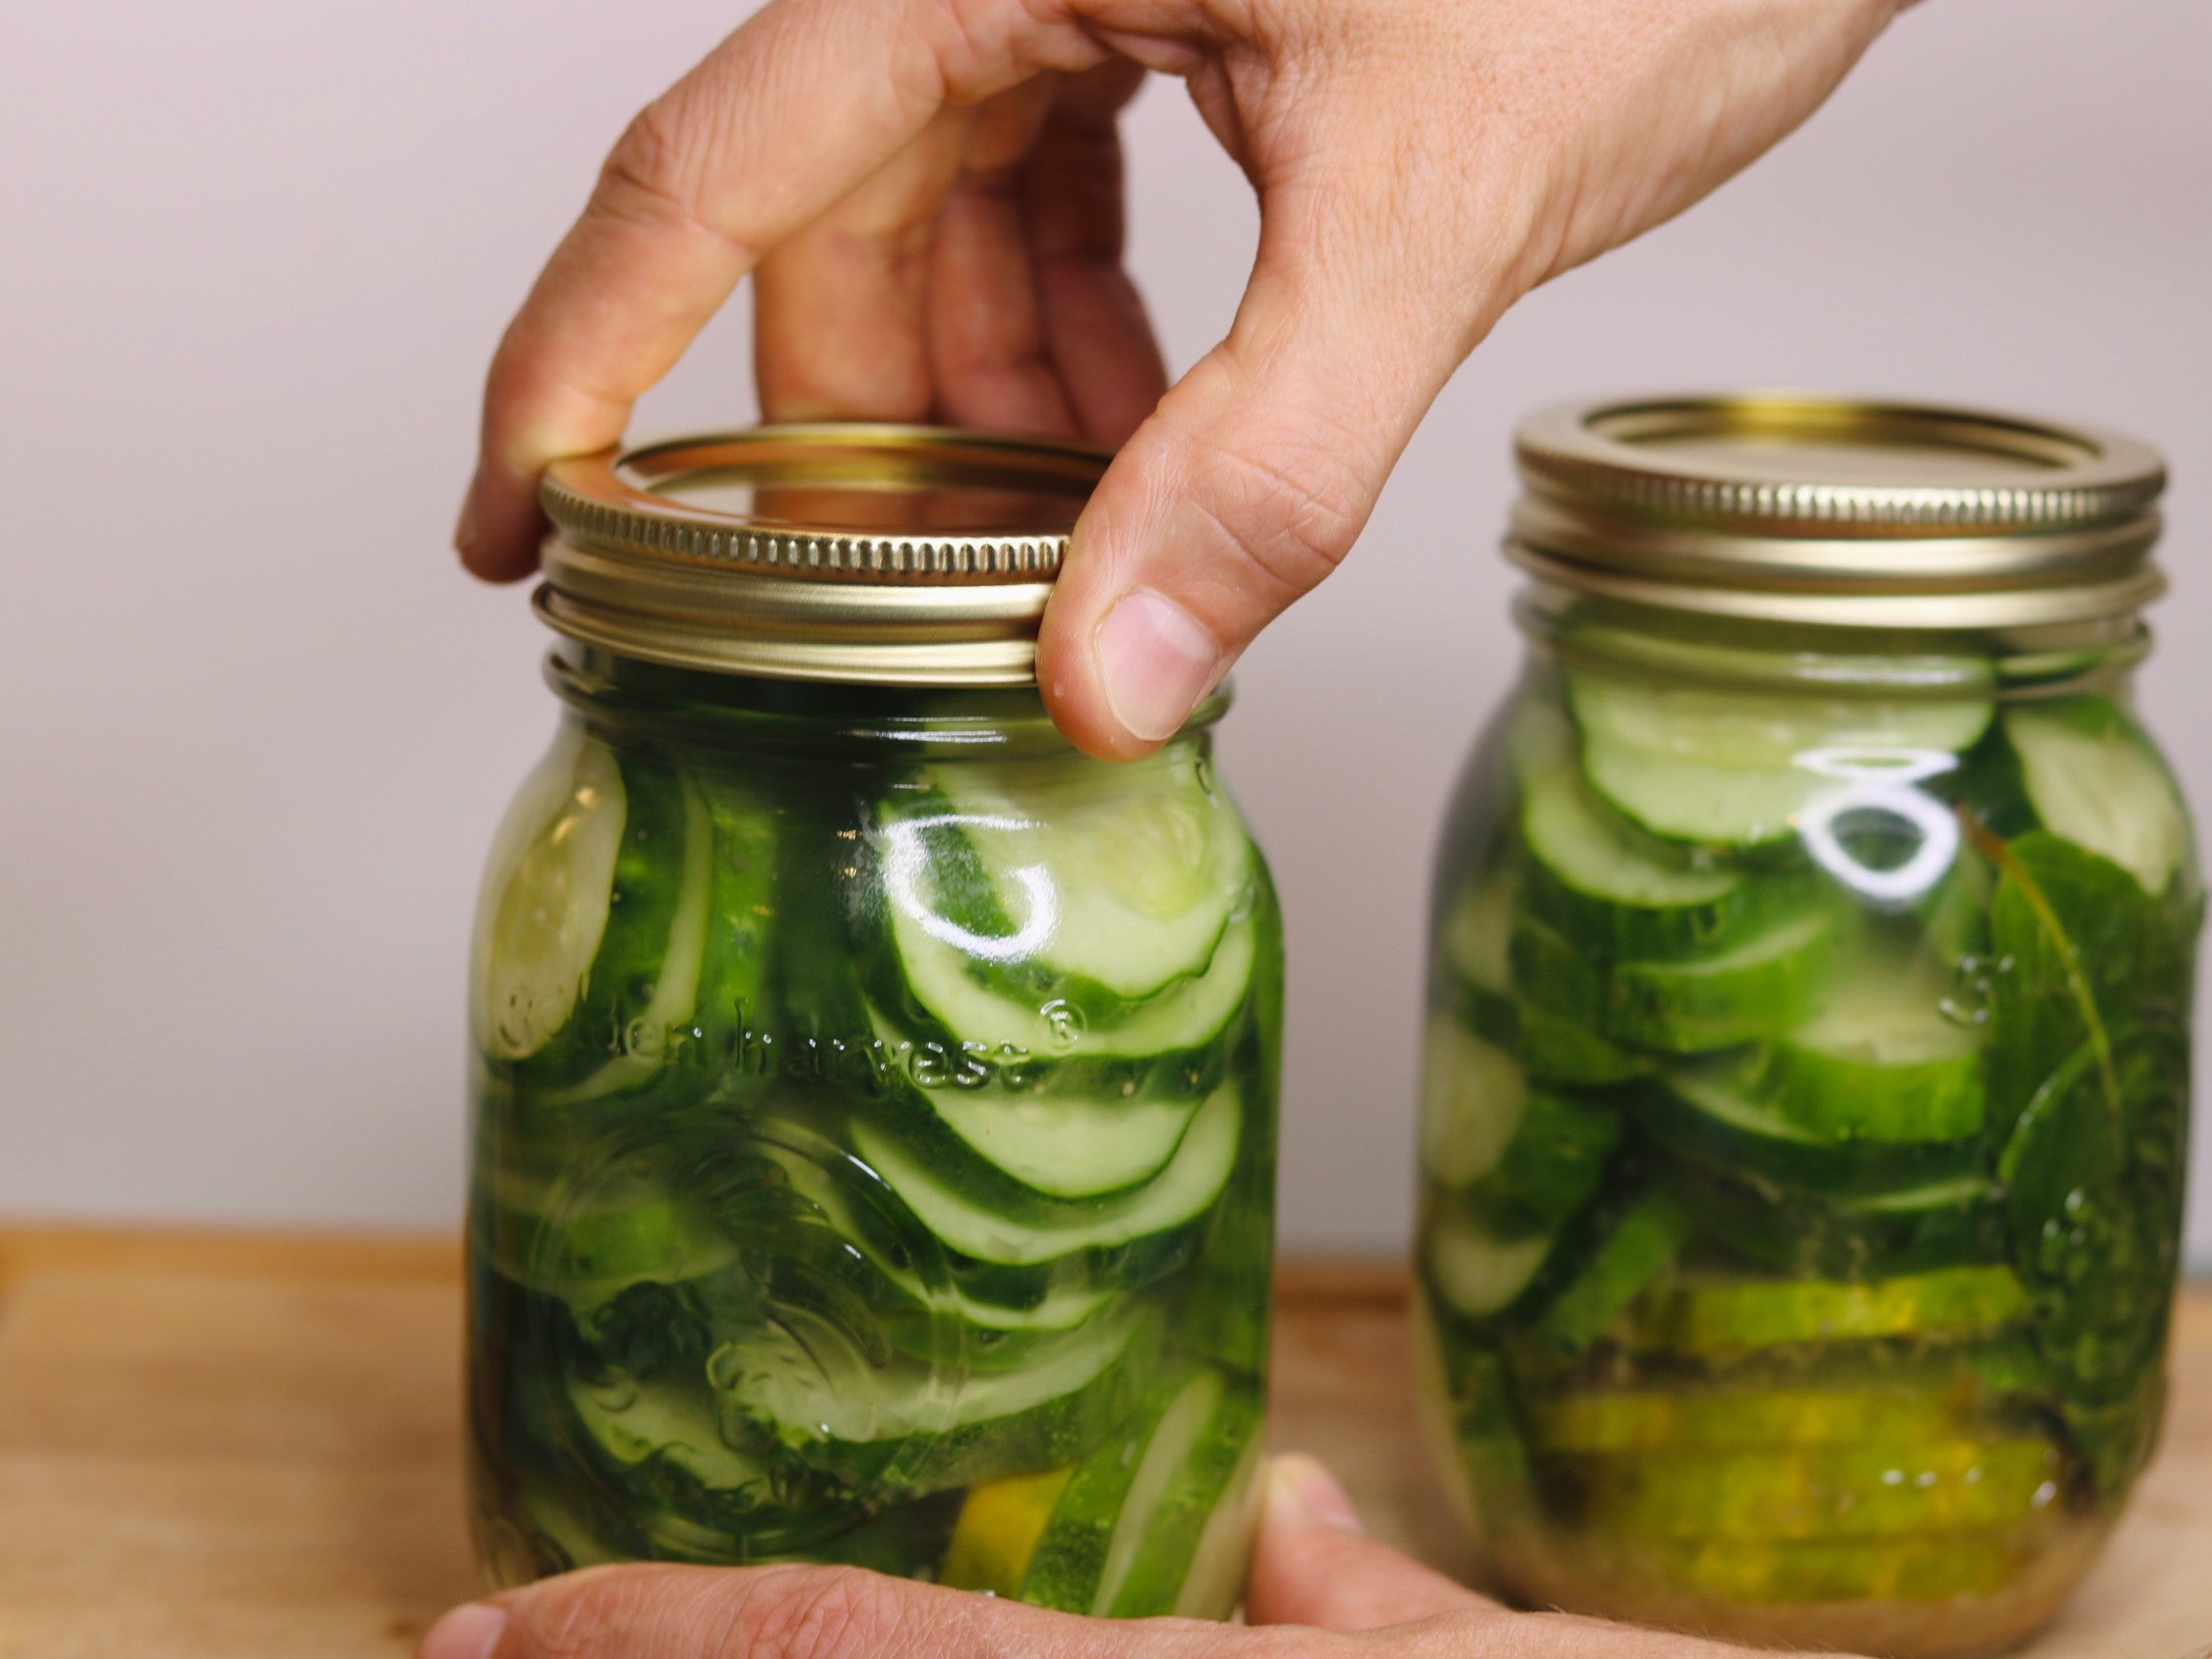 https://www.saveur.com/uploads/2021/09/16/canning-preserving-jars-of-cucumber-pickles-camilla-wynne.jpg?auto=webp